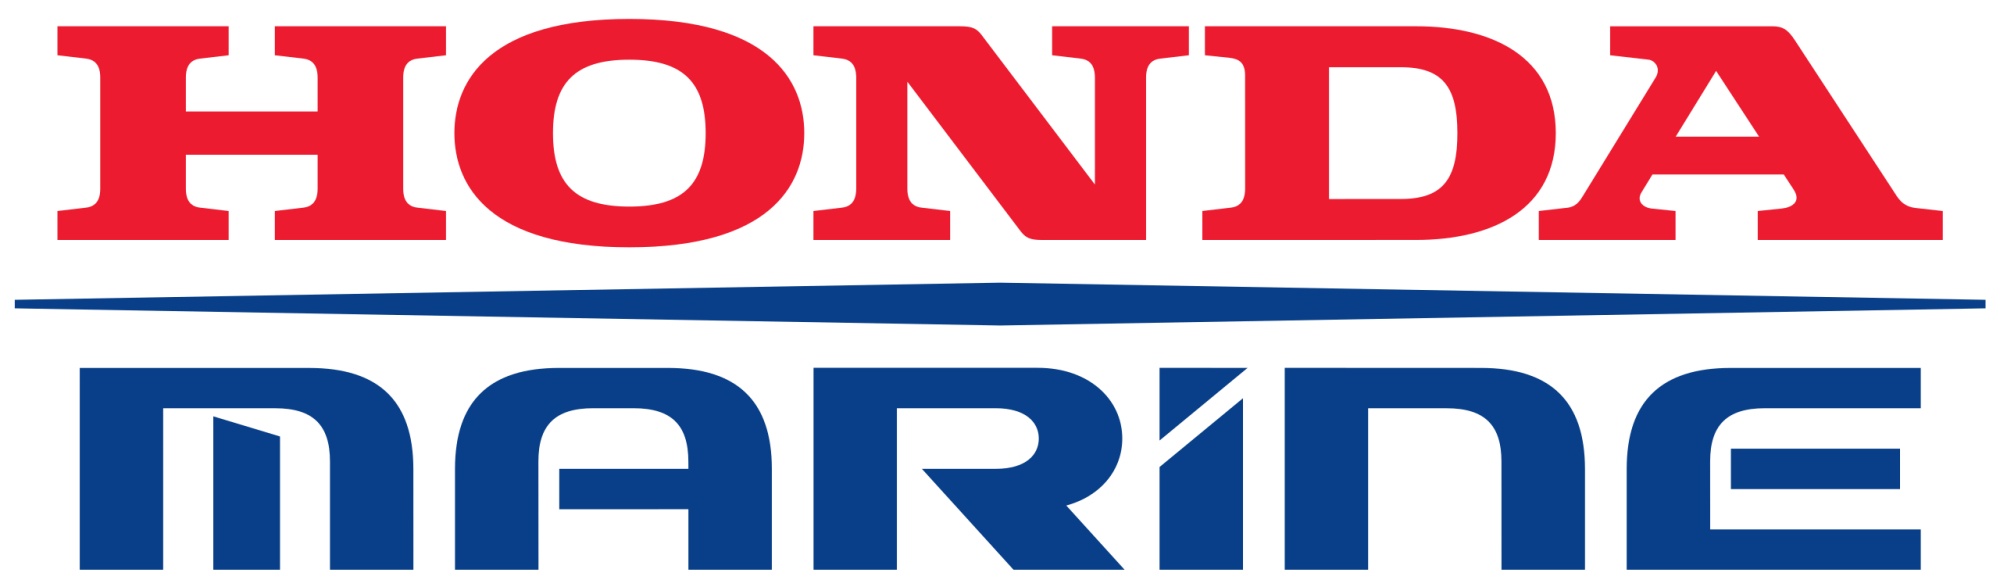 Honda_Marine_logo.svg.png